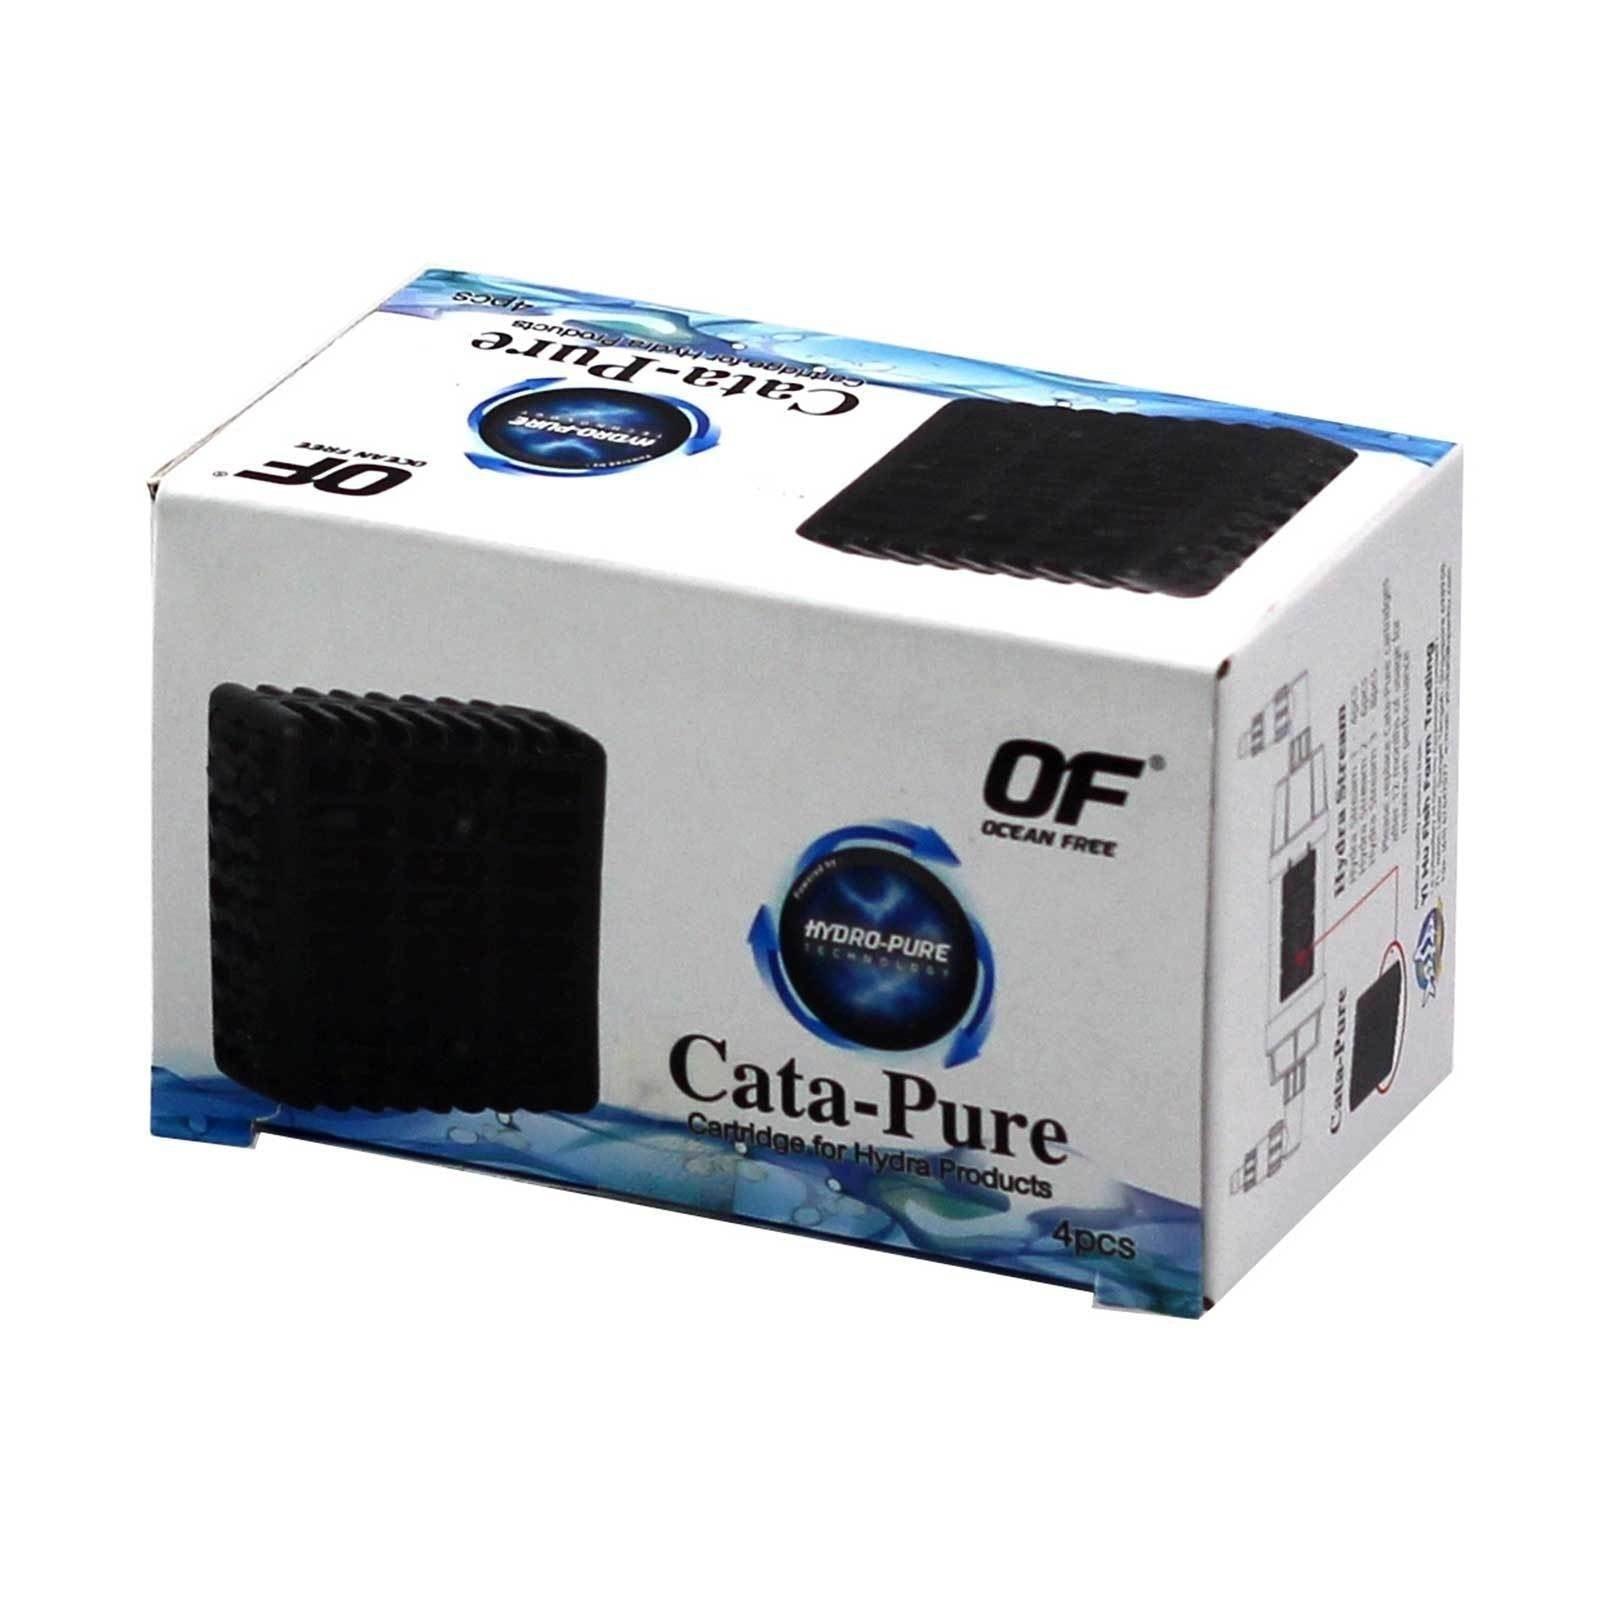 Ocean Free Hydra 20-30-40-50 And Stream Cata-Pure Cartridge (4 Pack) - Amazing Amazon